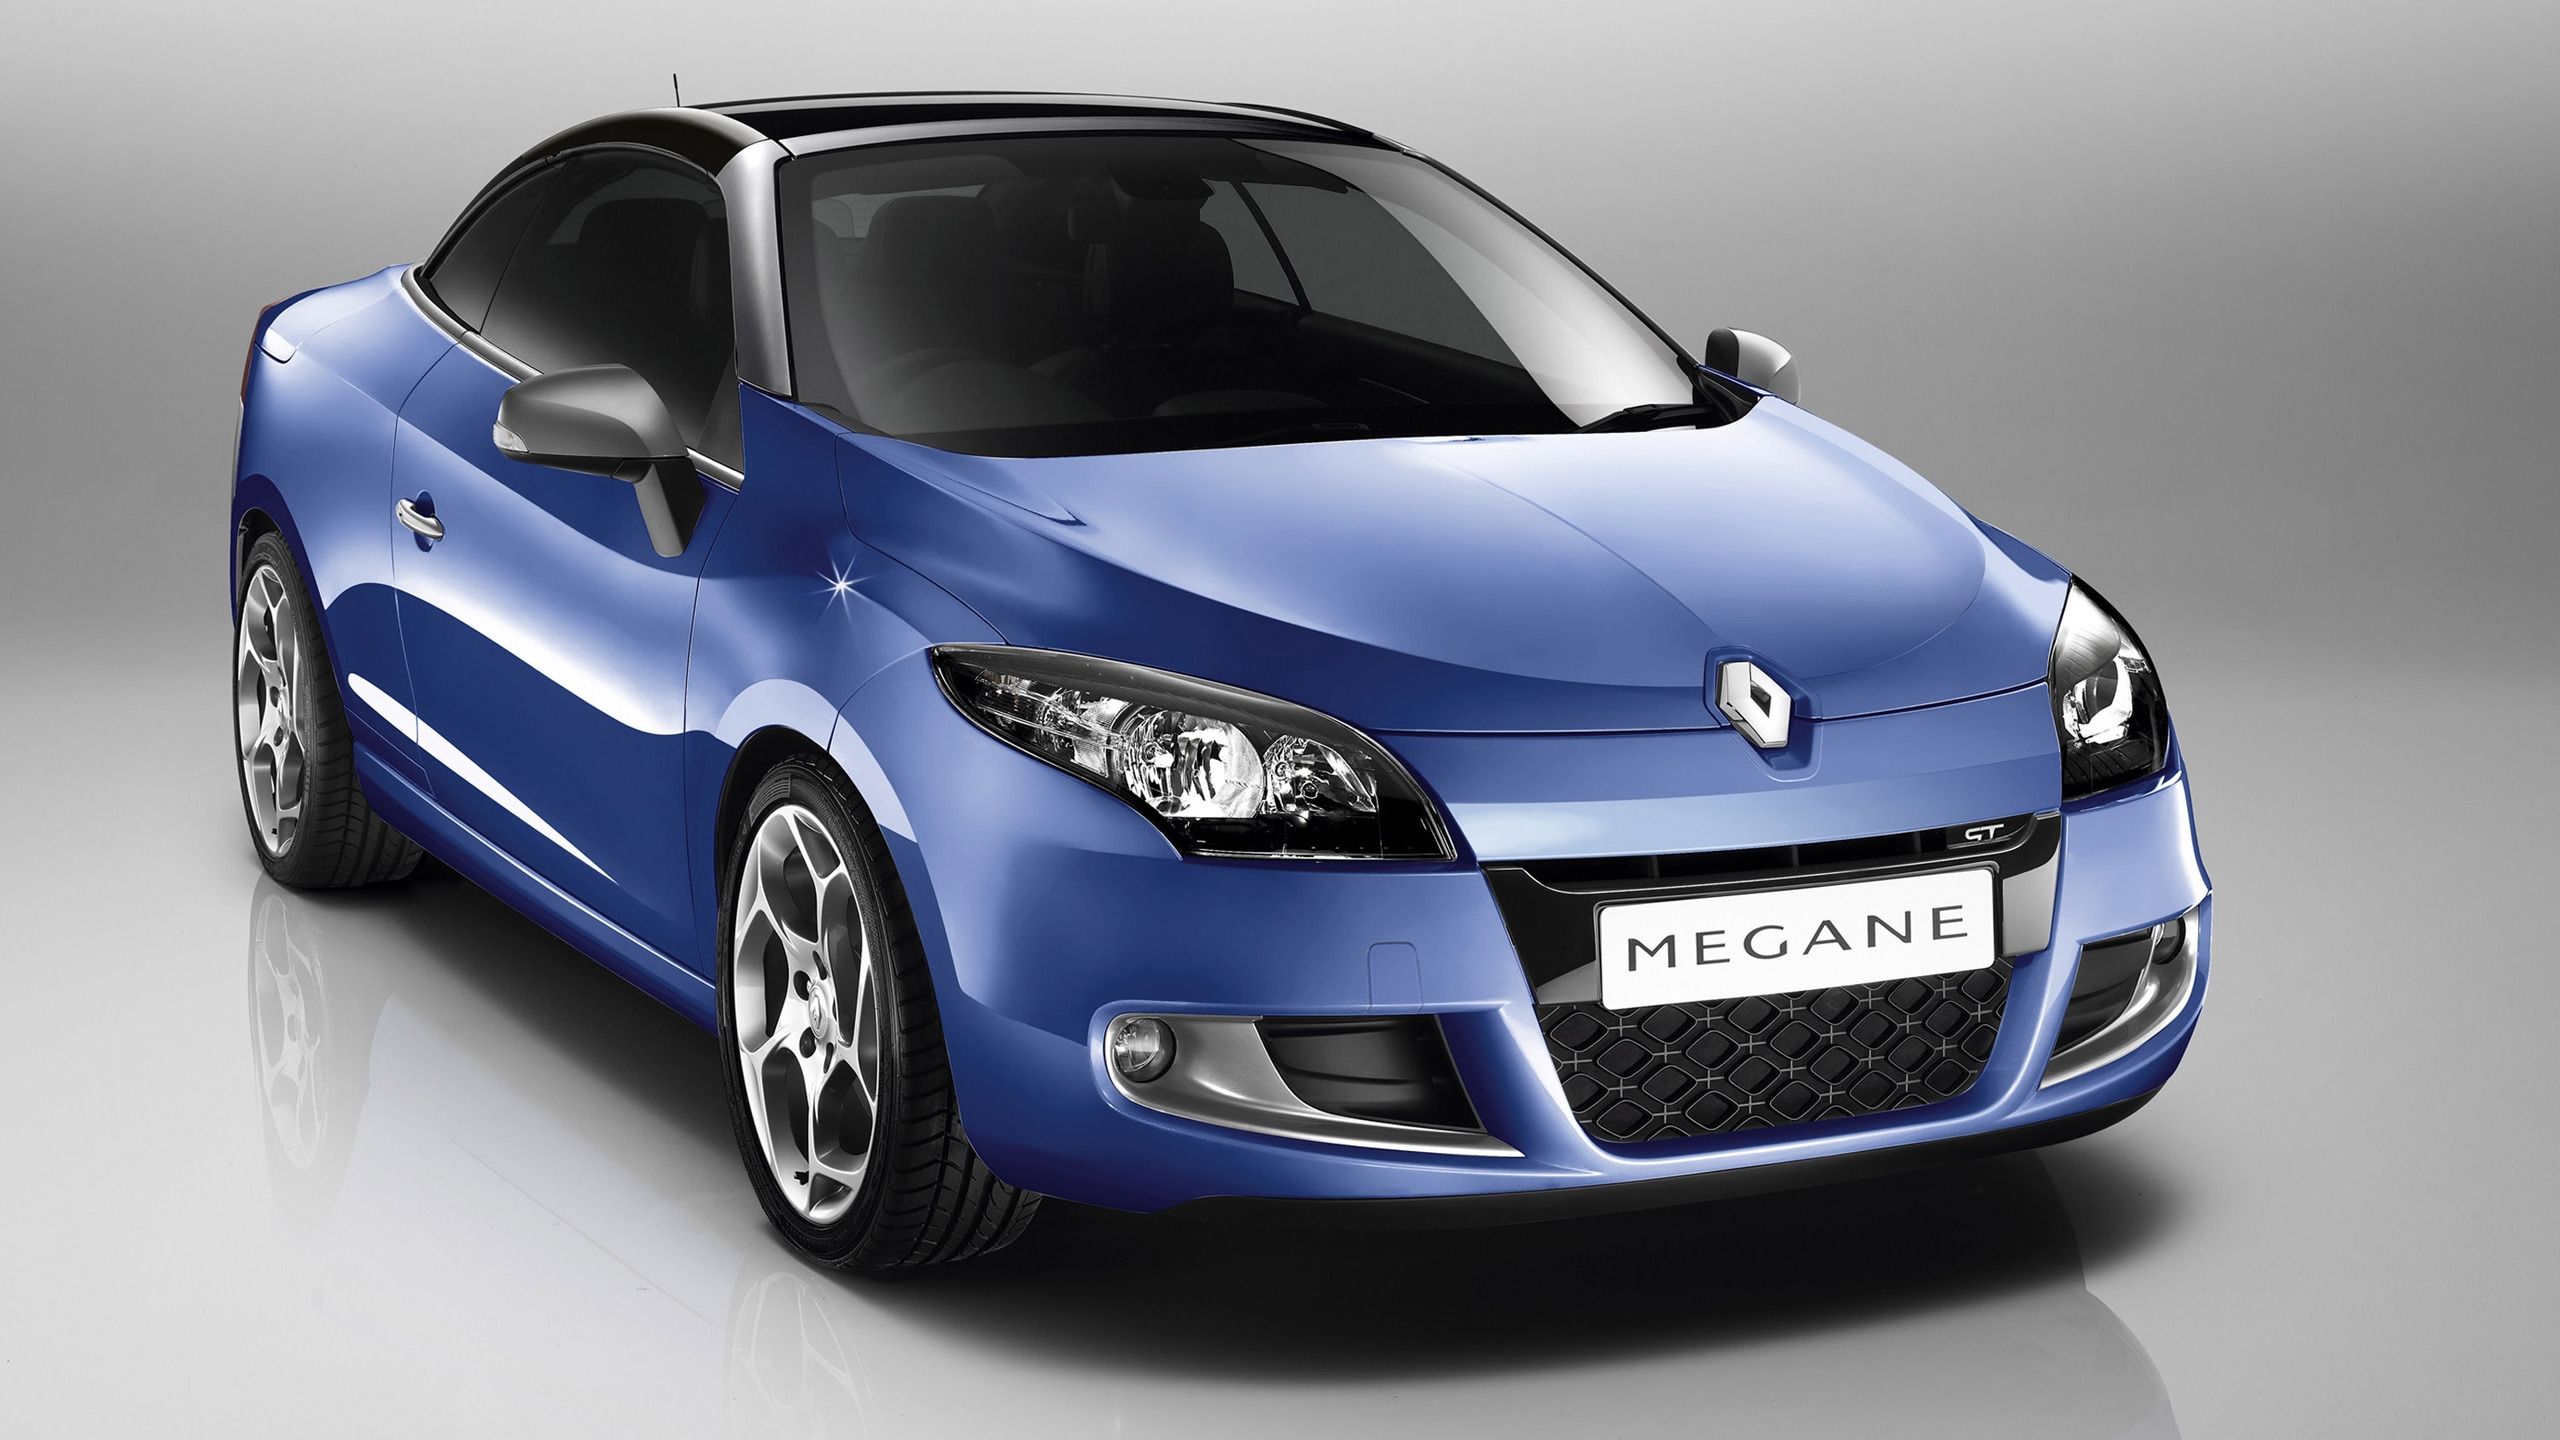 Megane Coupe Cabriolet GT for 2560x1440 HDTV resolution